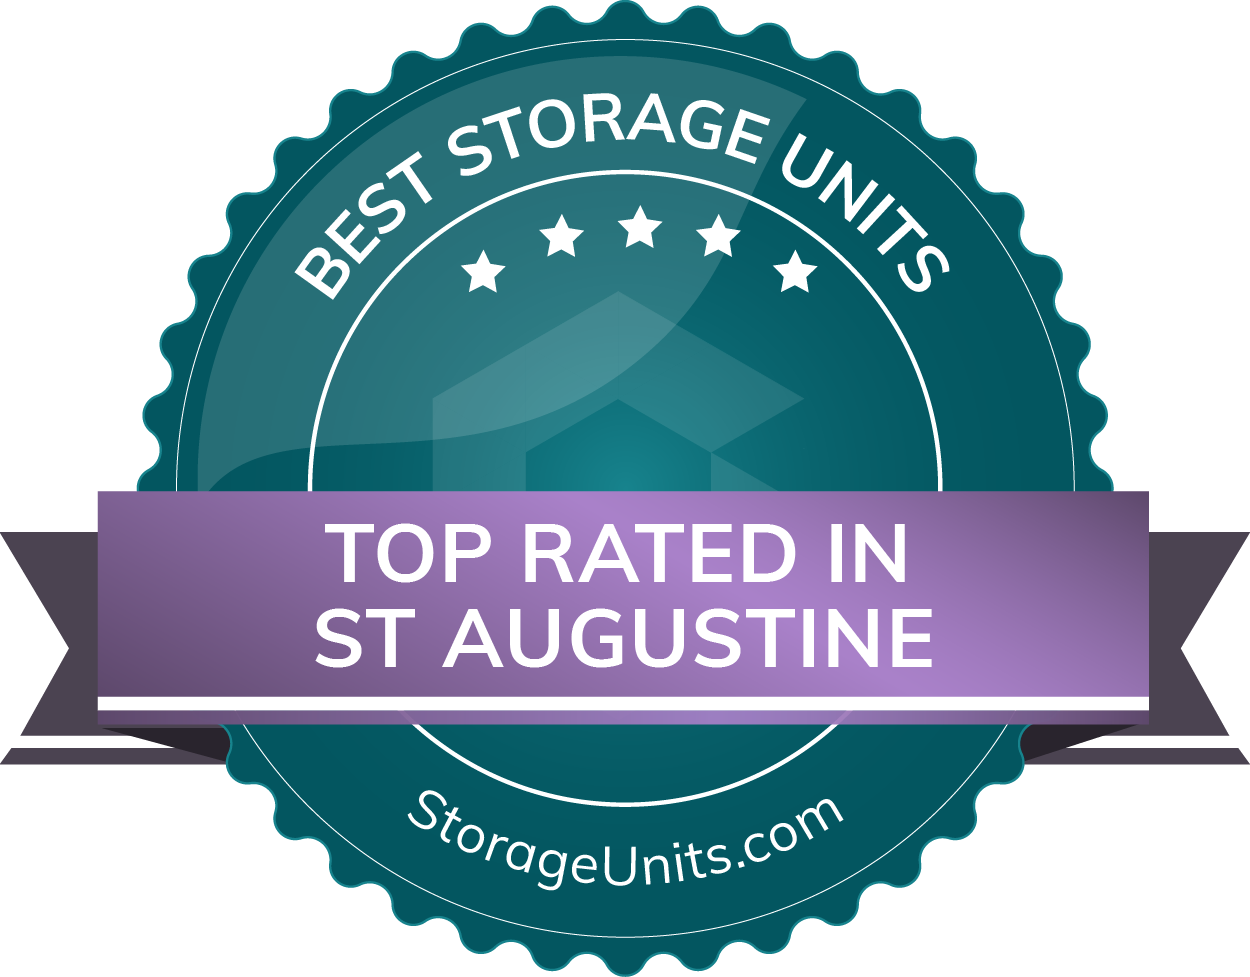 Best Self Storage Units in St Augustine, Florida of 2022